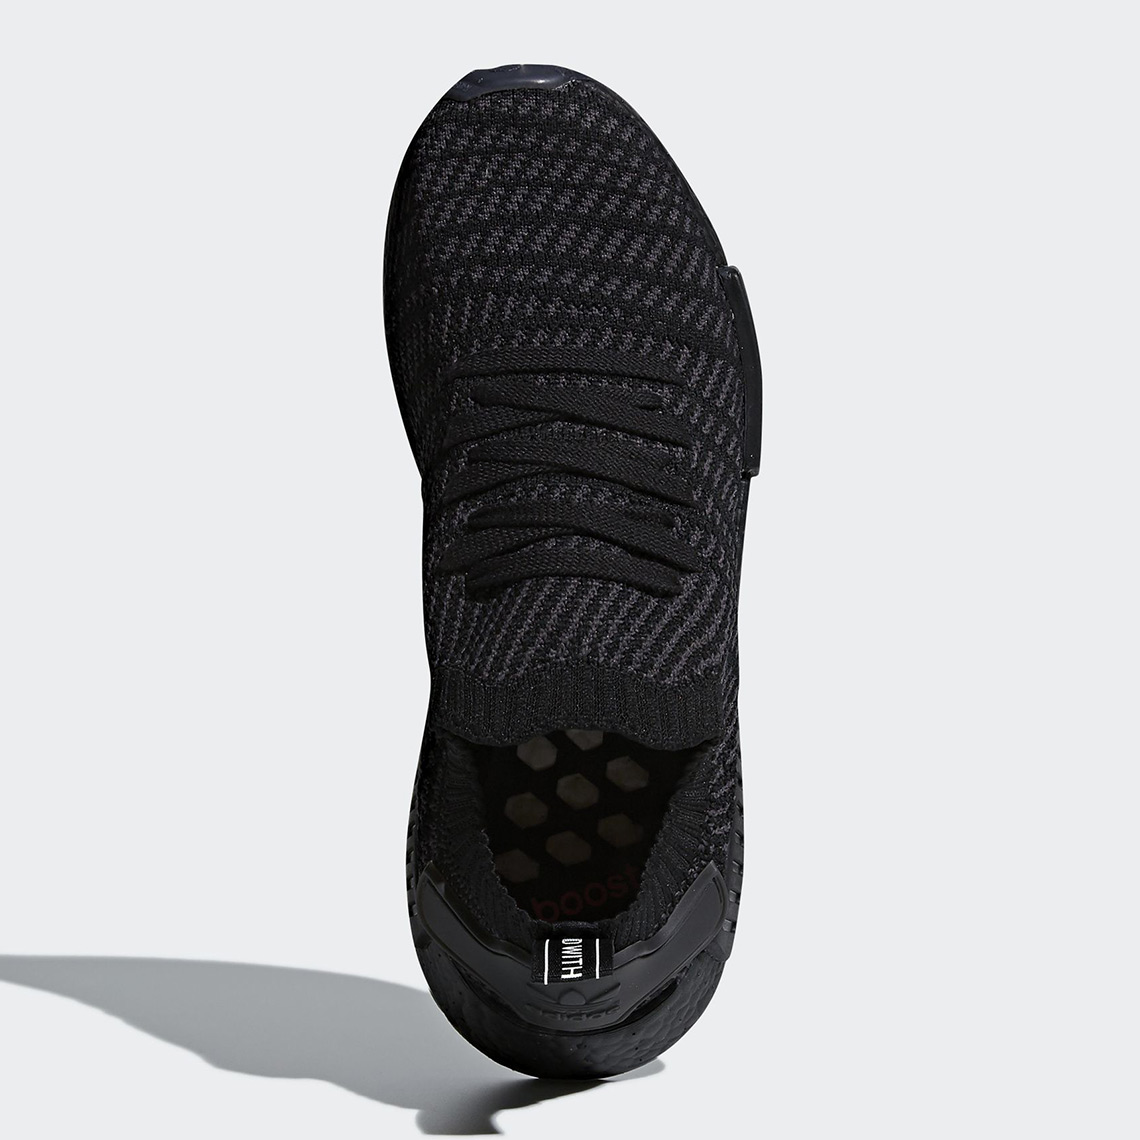 Adidas Nmd Stltl Triple Black Coming Soon 3